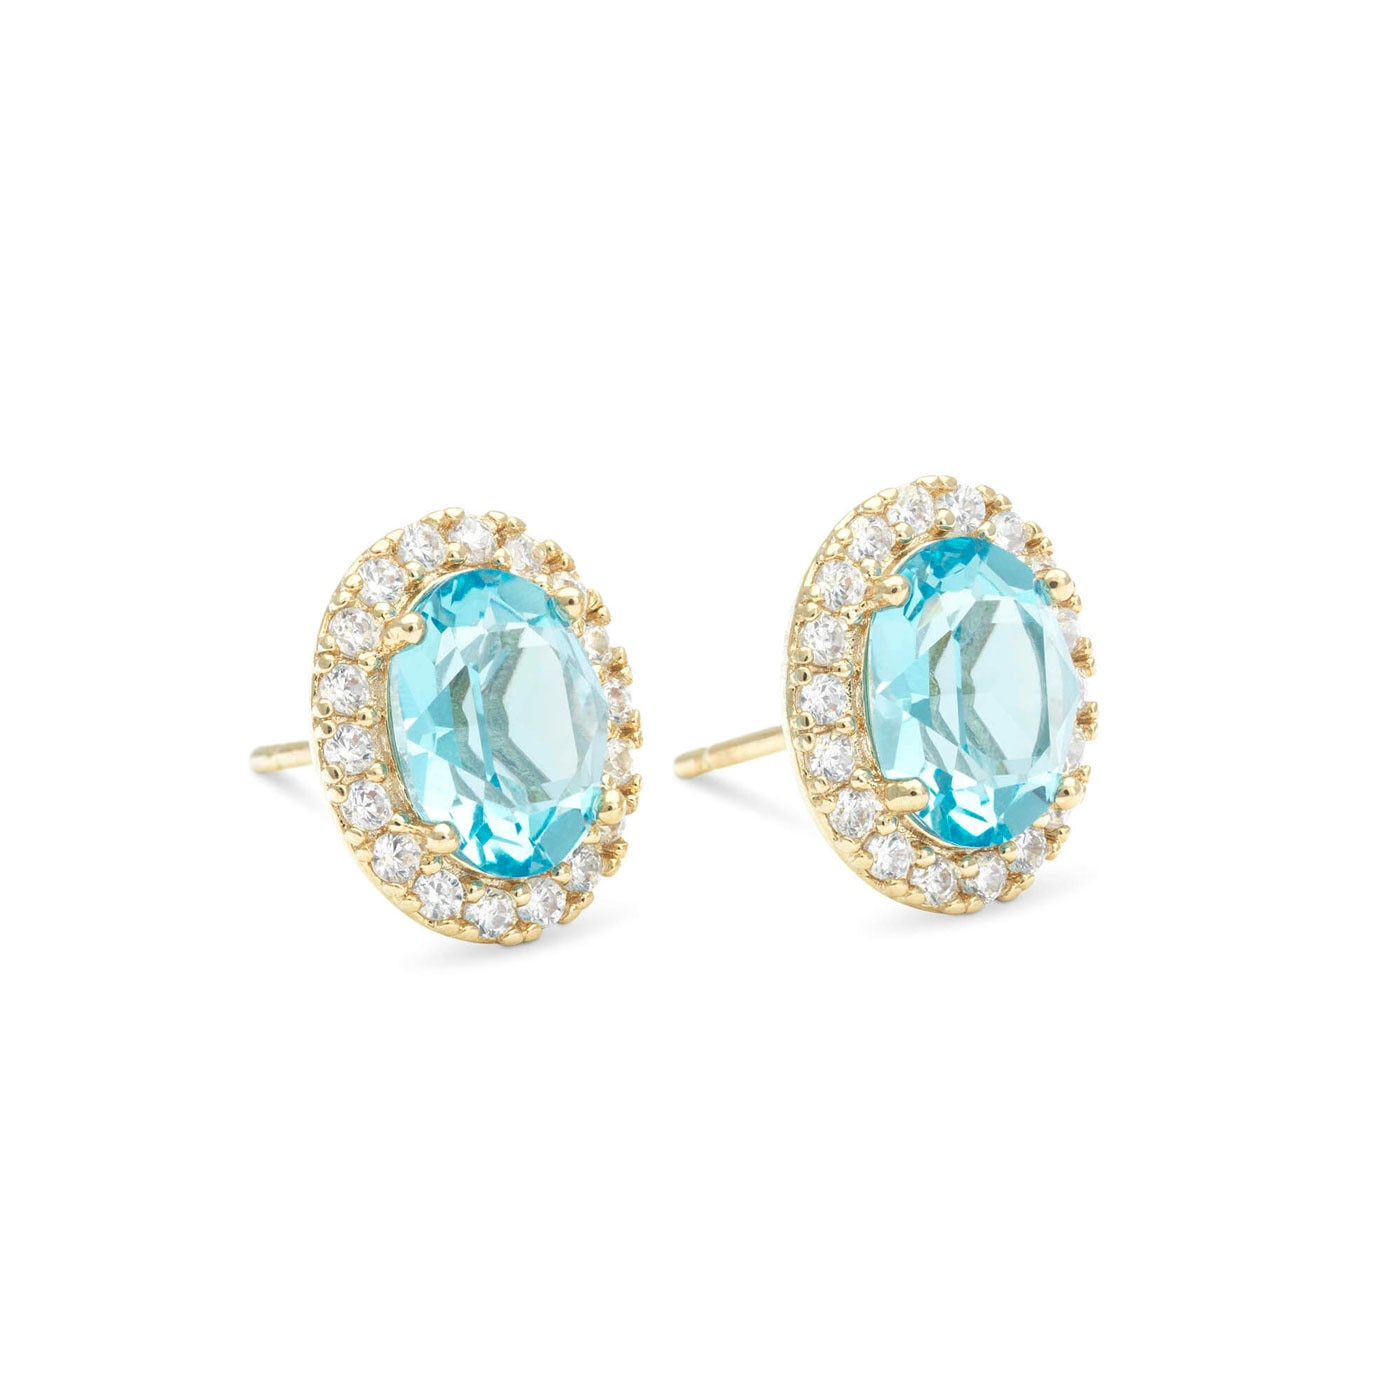 Luna earrings - Aquamarine